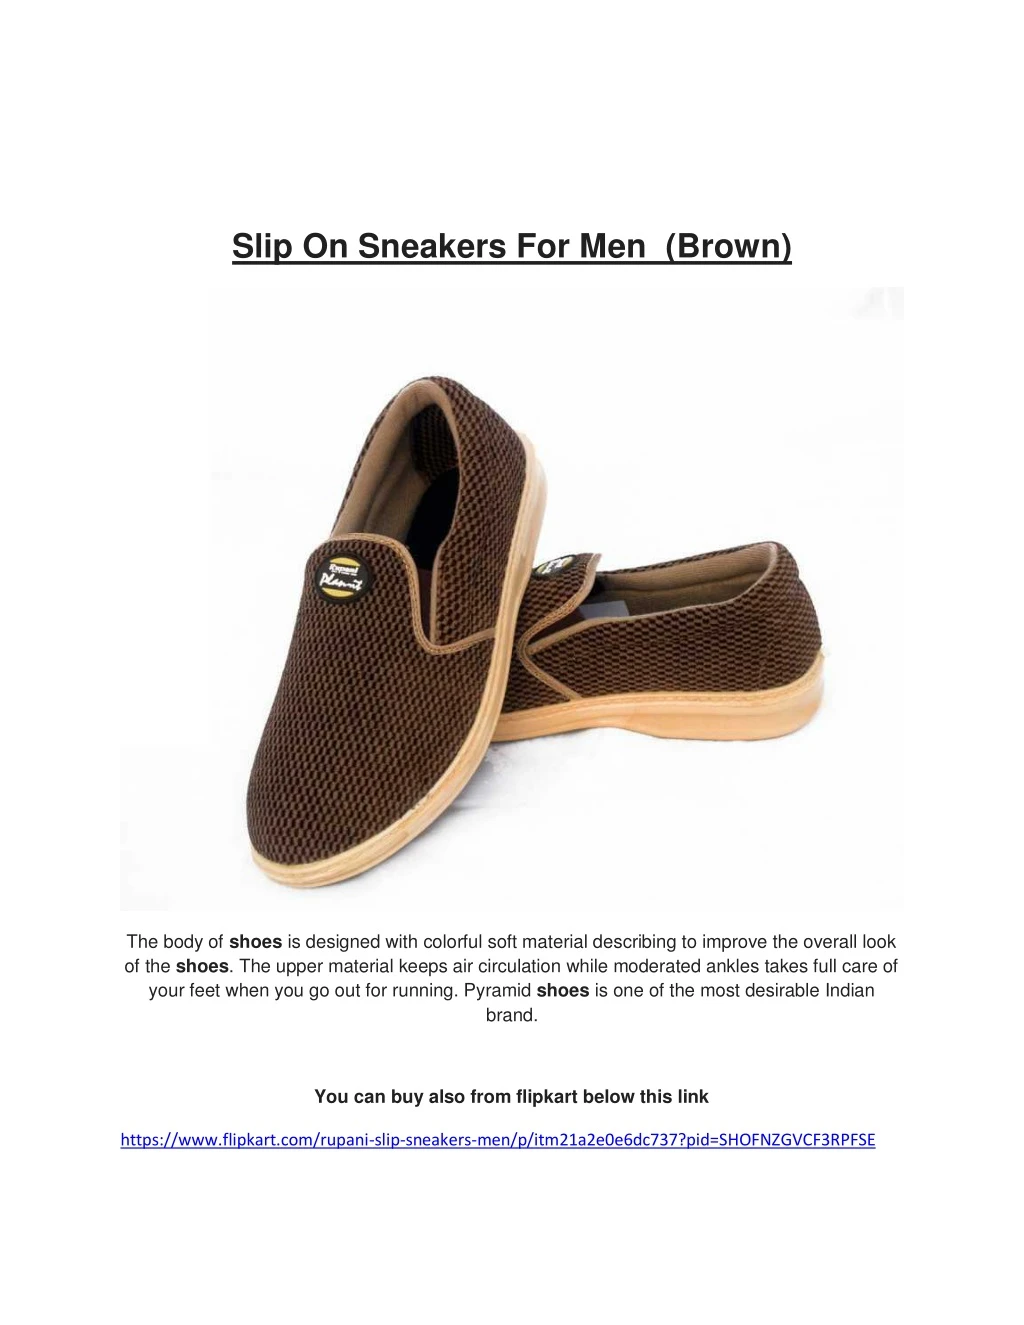 slip on sneakers for men brown